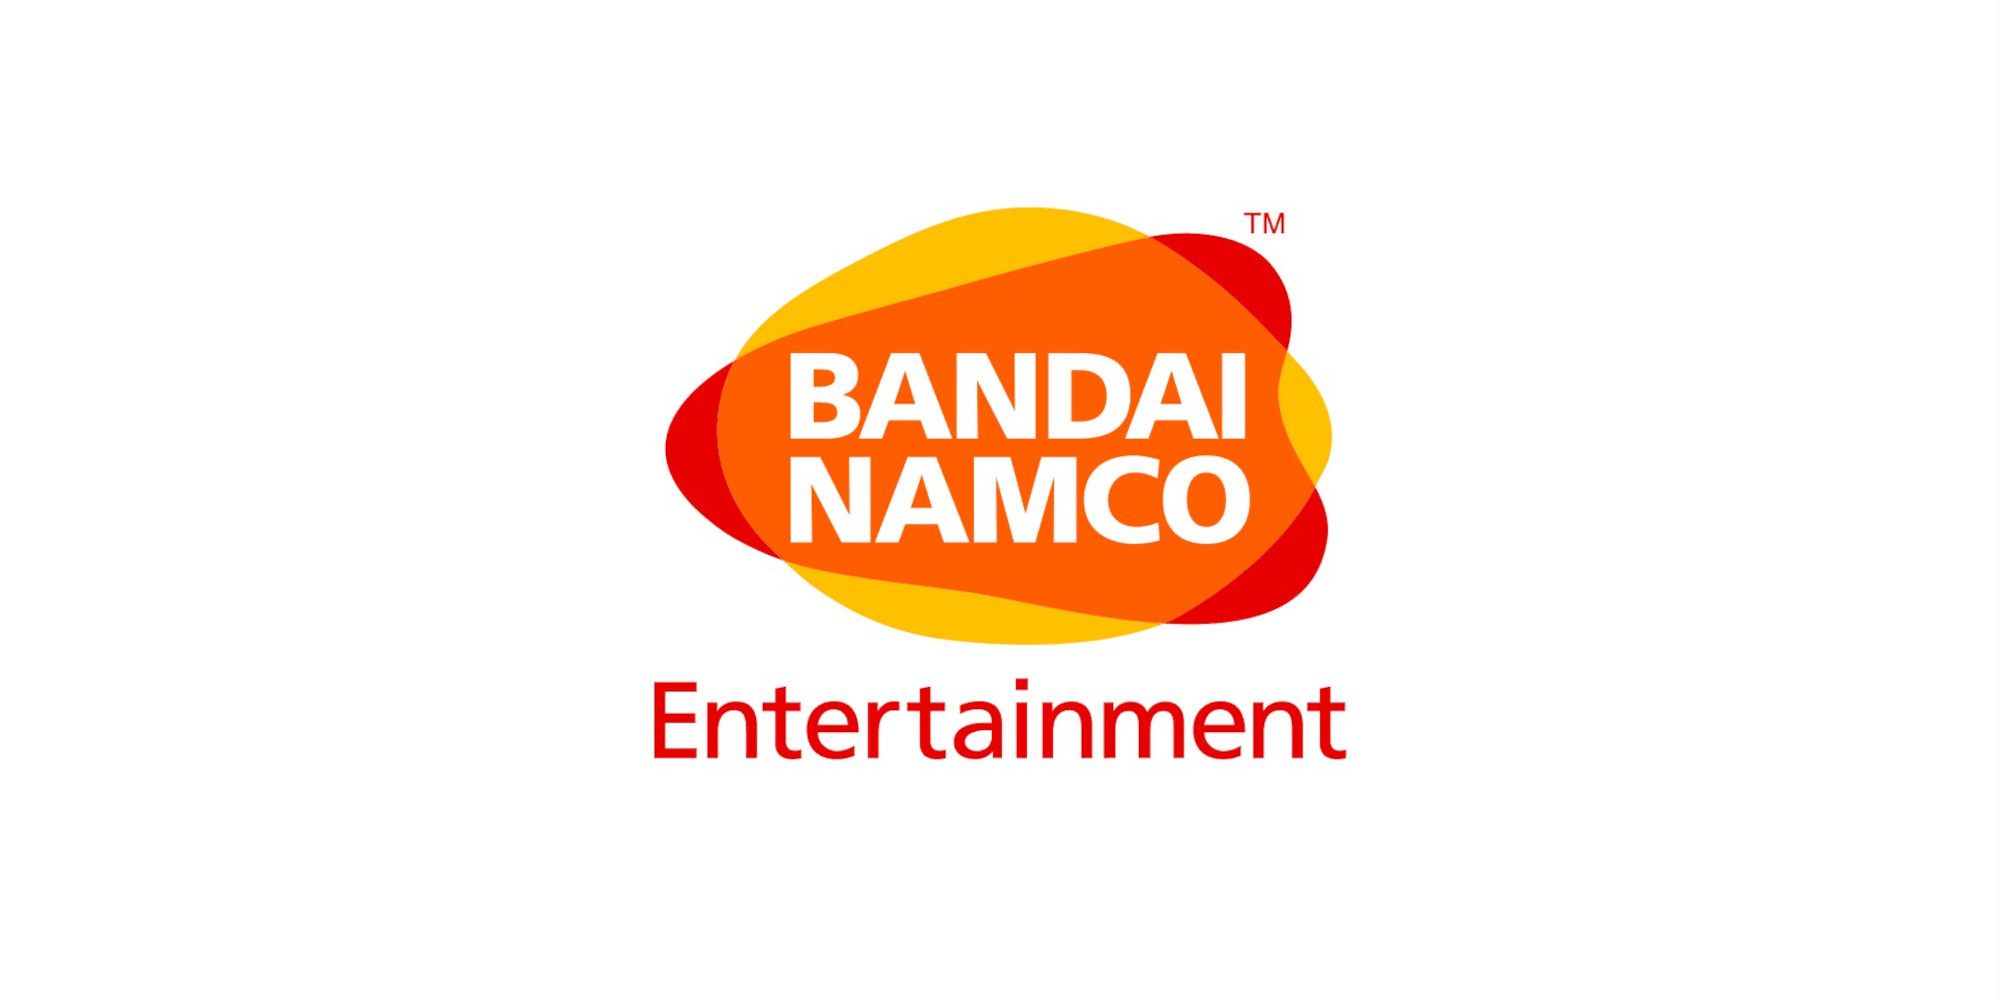 Elden Ring Bandai Namco Entertainment logo